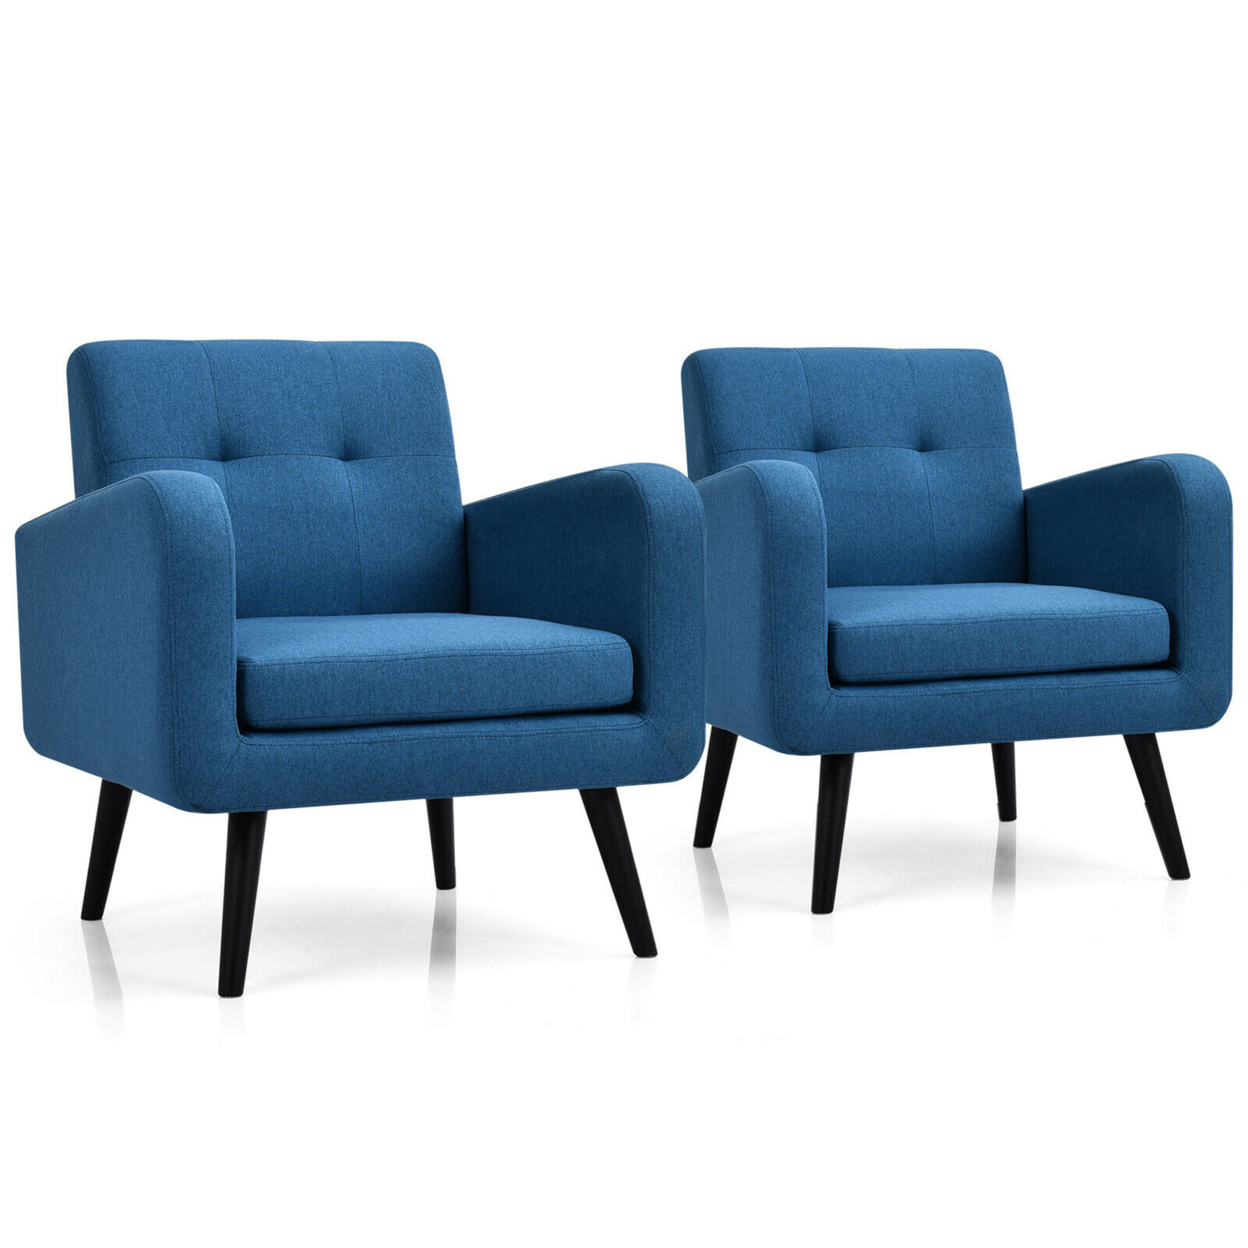 2PCS Accent Armchair Single Sofa Chair Home Office W/ Wooden Legs Blue